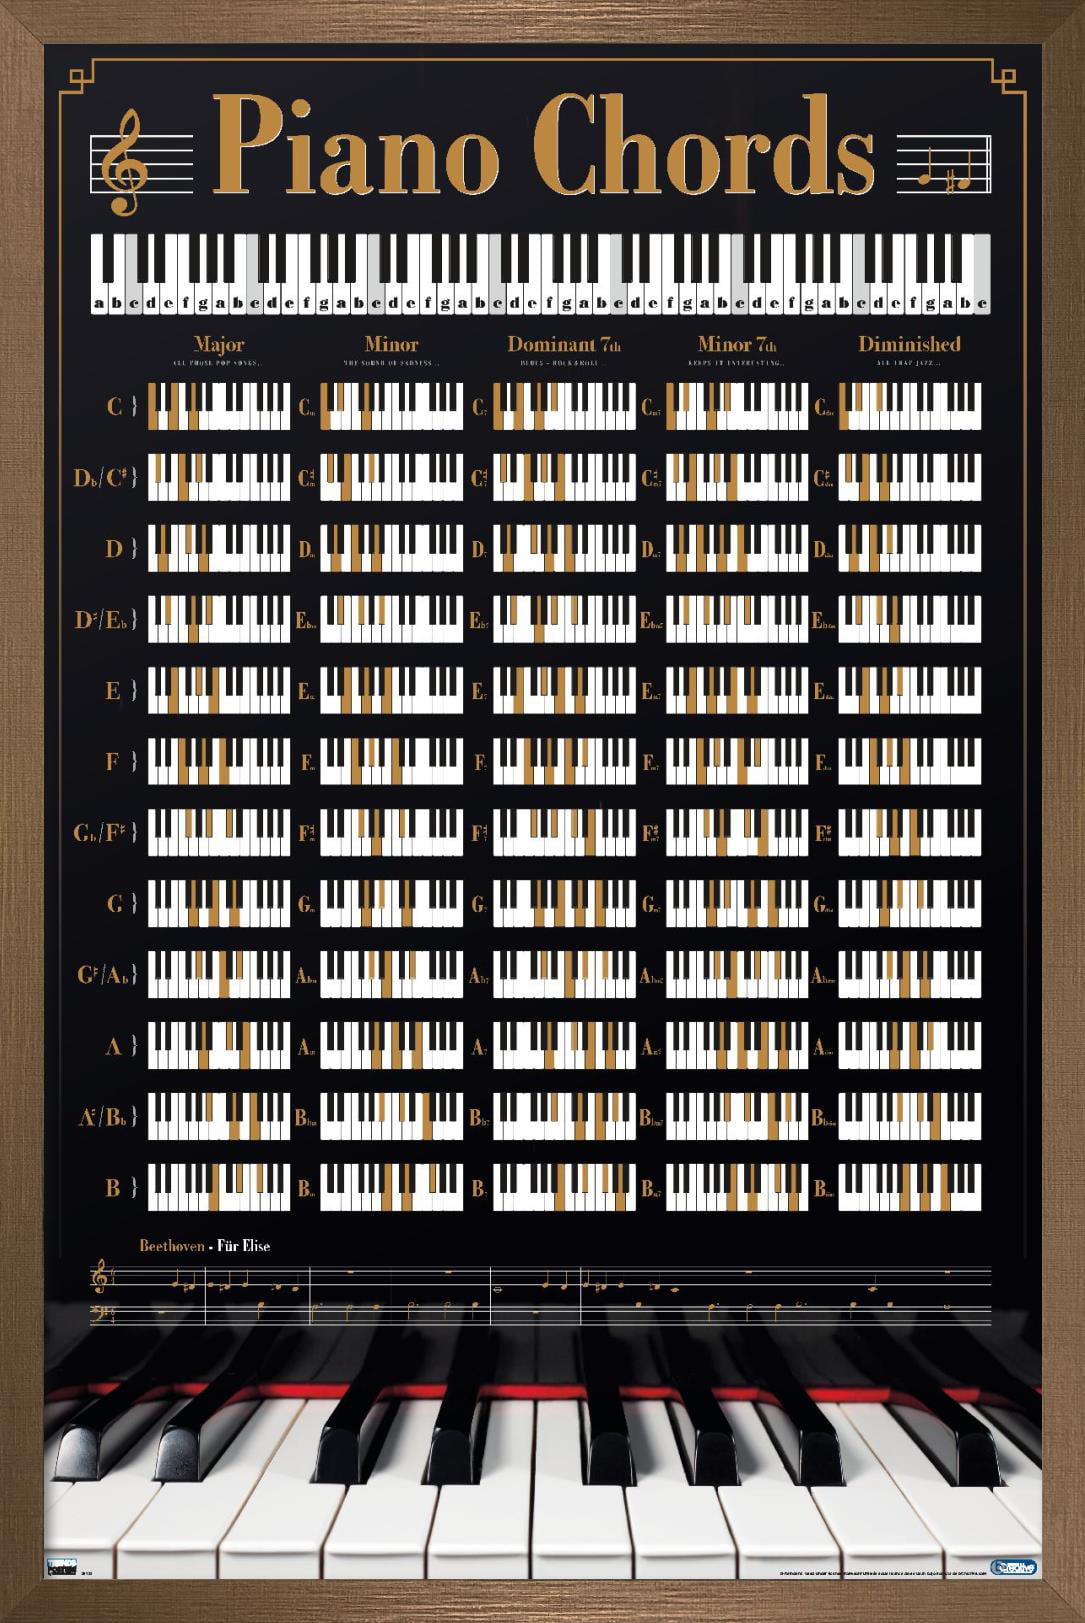 Reinders - Piano Keys Wall Poster, 14.725